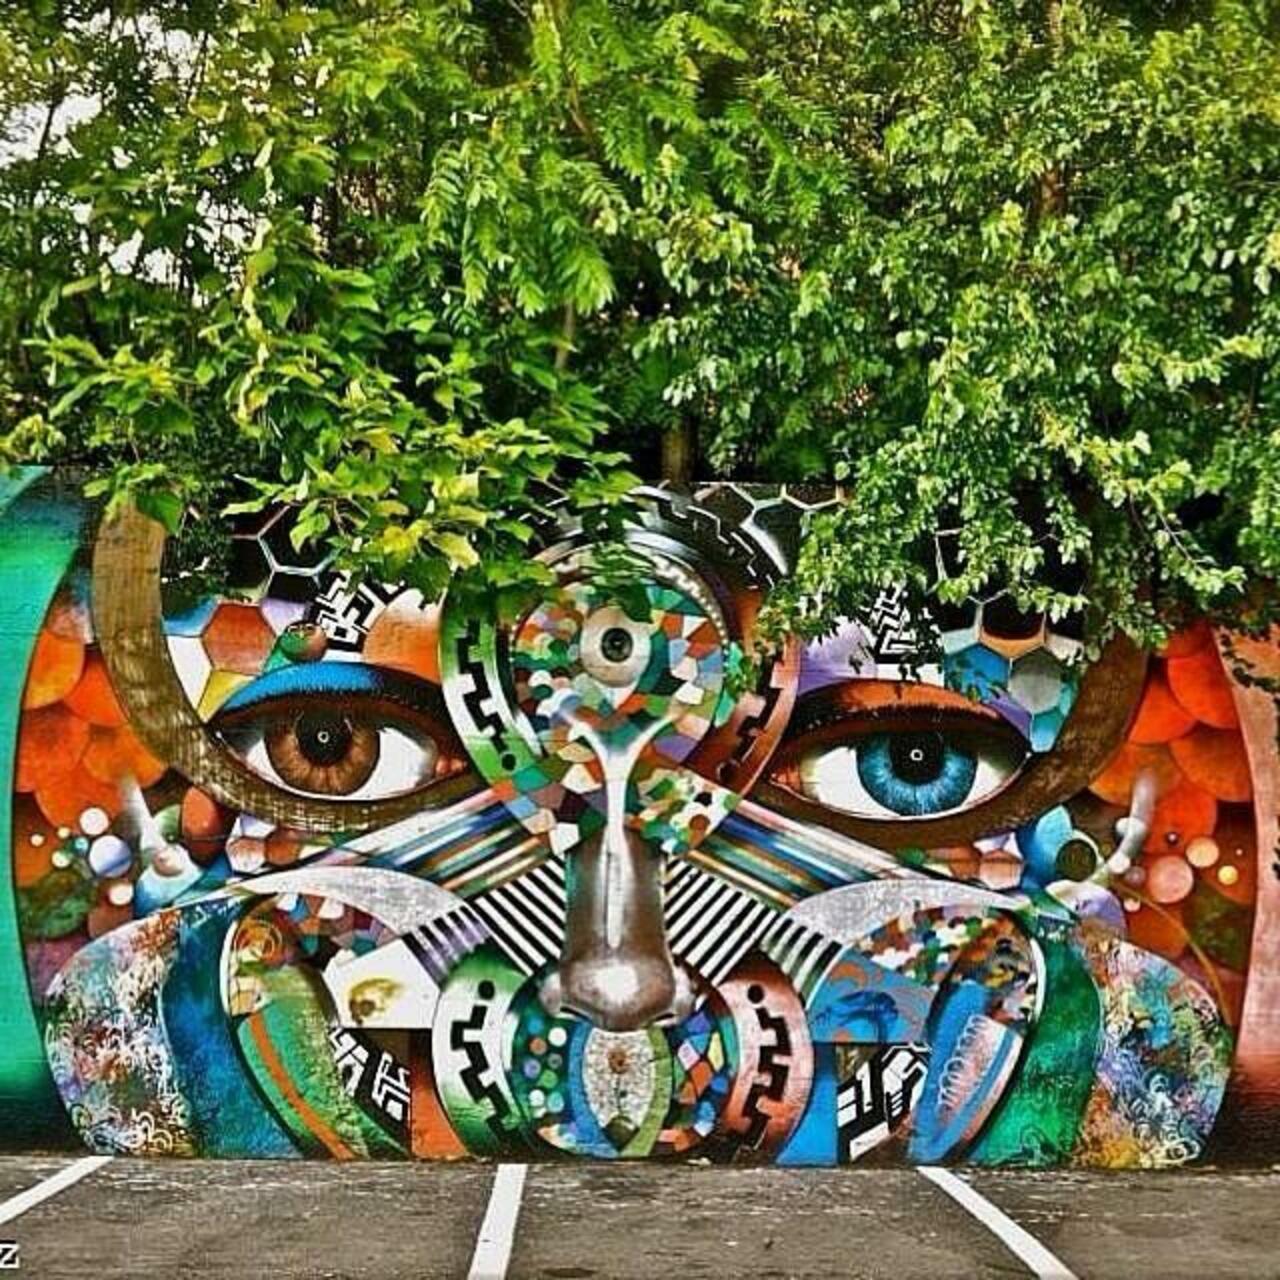 "@designopinion: Artist @chorboogie new nature & Street Art piece. #art #mural #graffiti #streetart http://t.co/OfMWiQ497N"